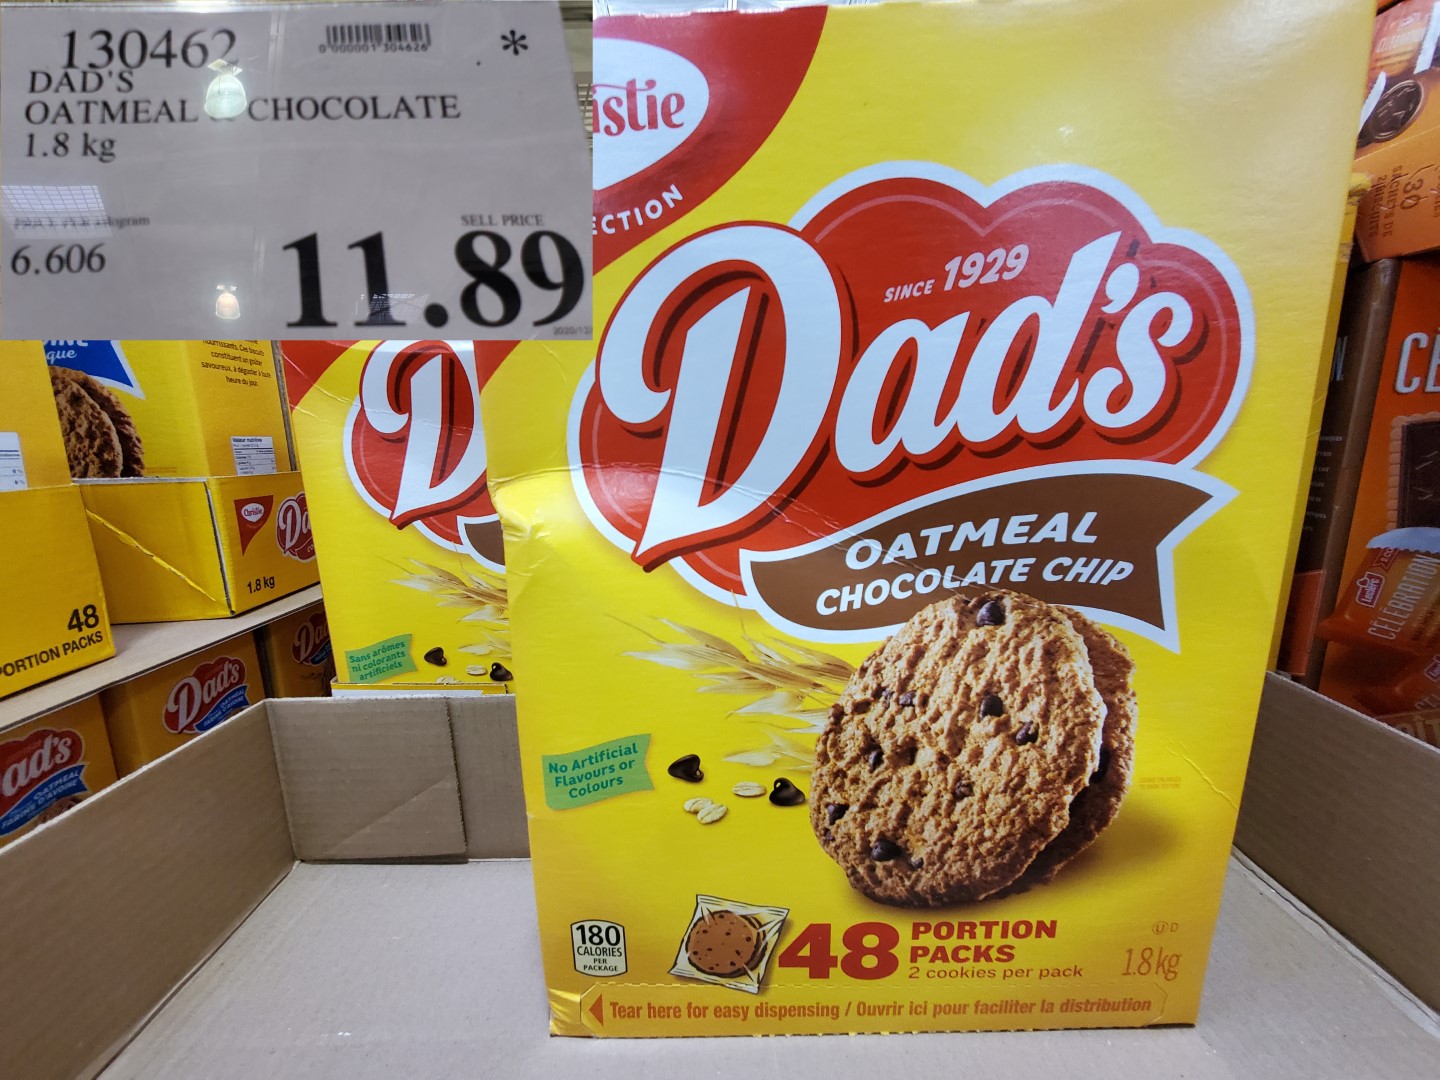 dad's oatmeal cookies